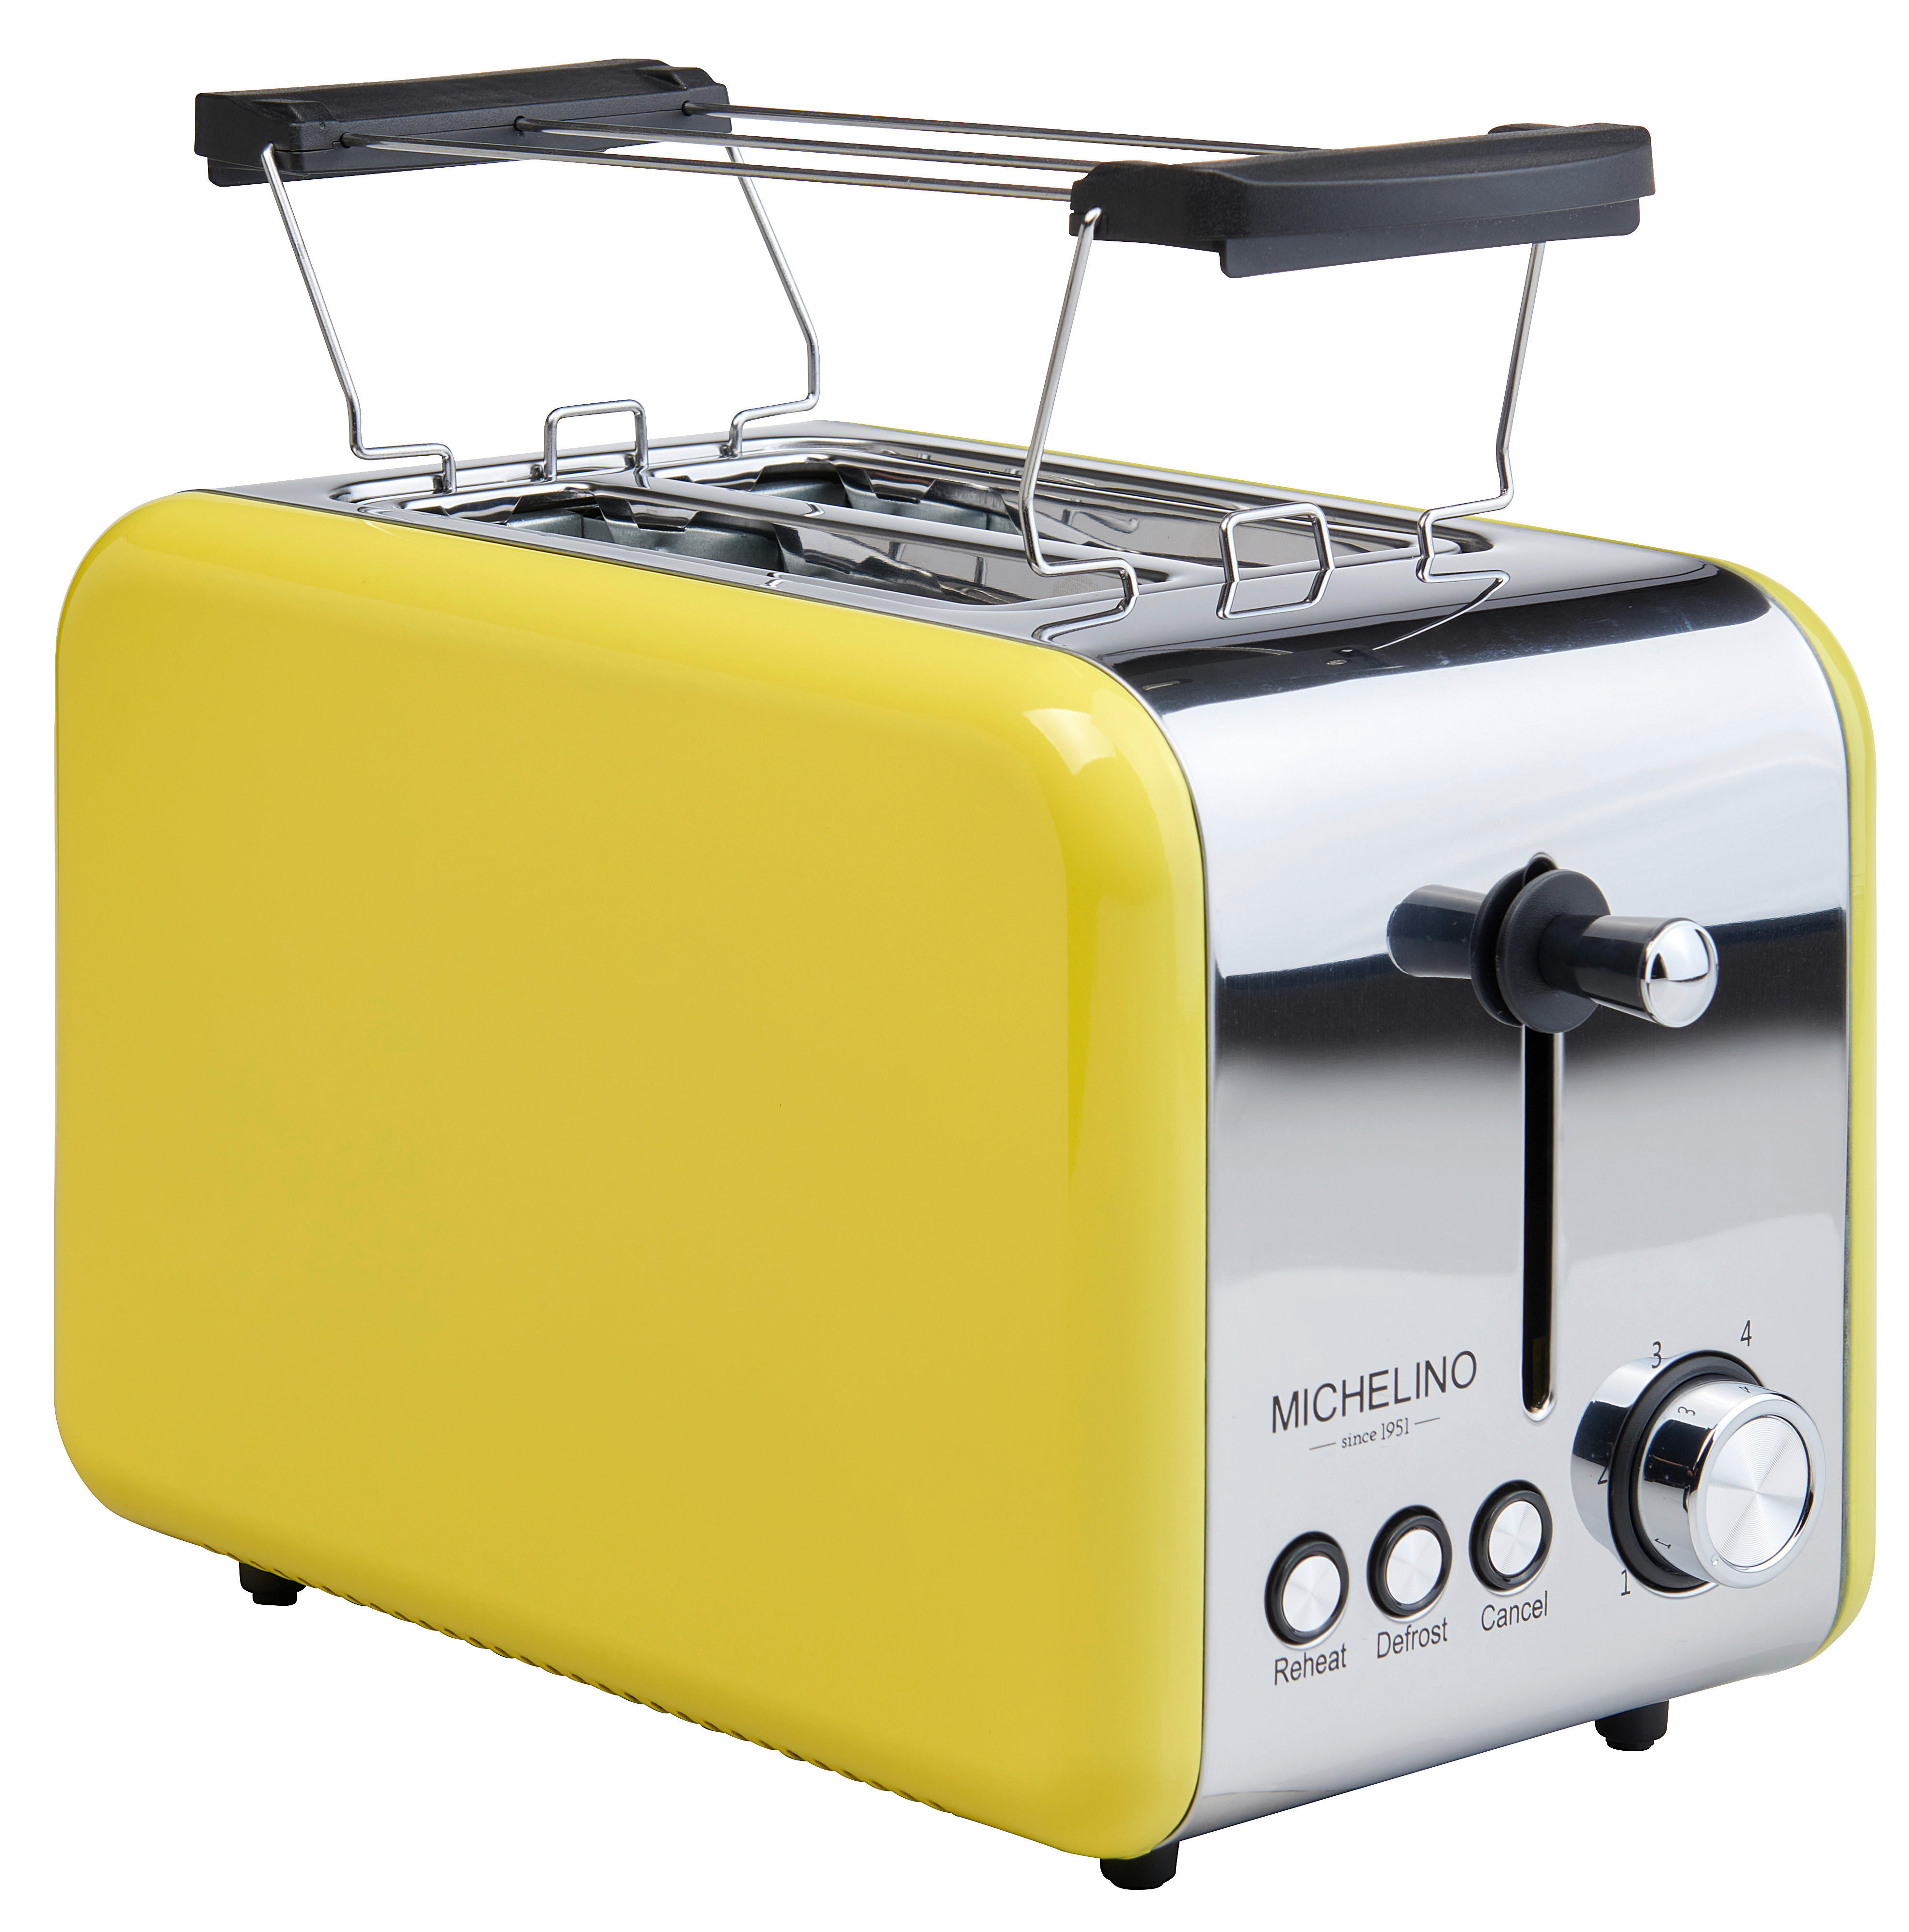 GRUNDIG Toaster TA 6330 hier entdecken